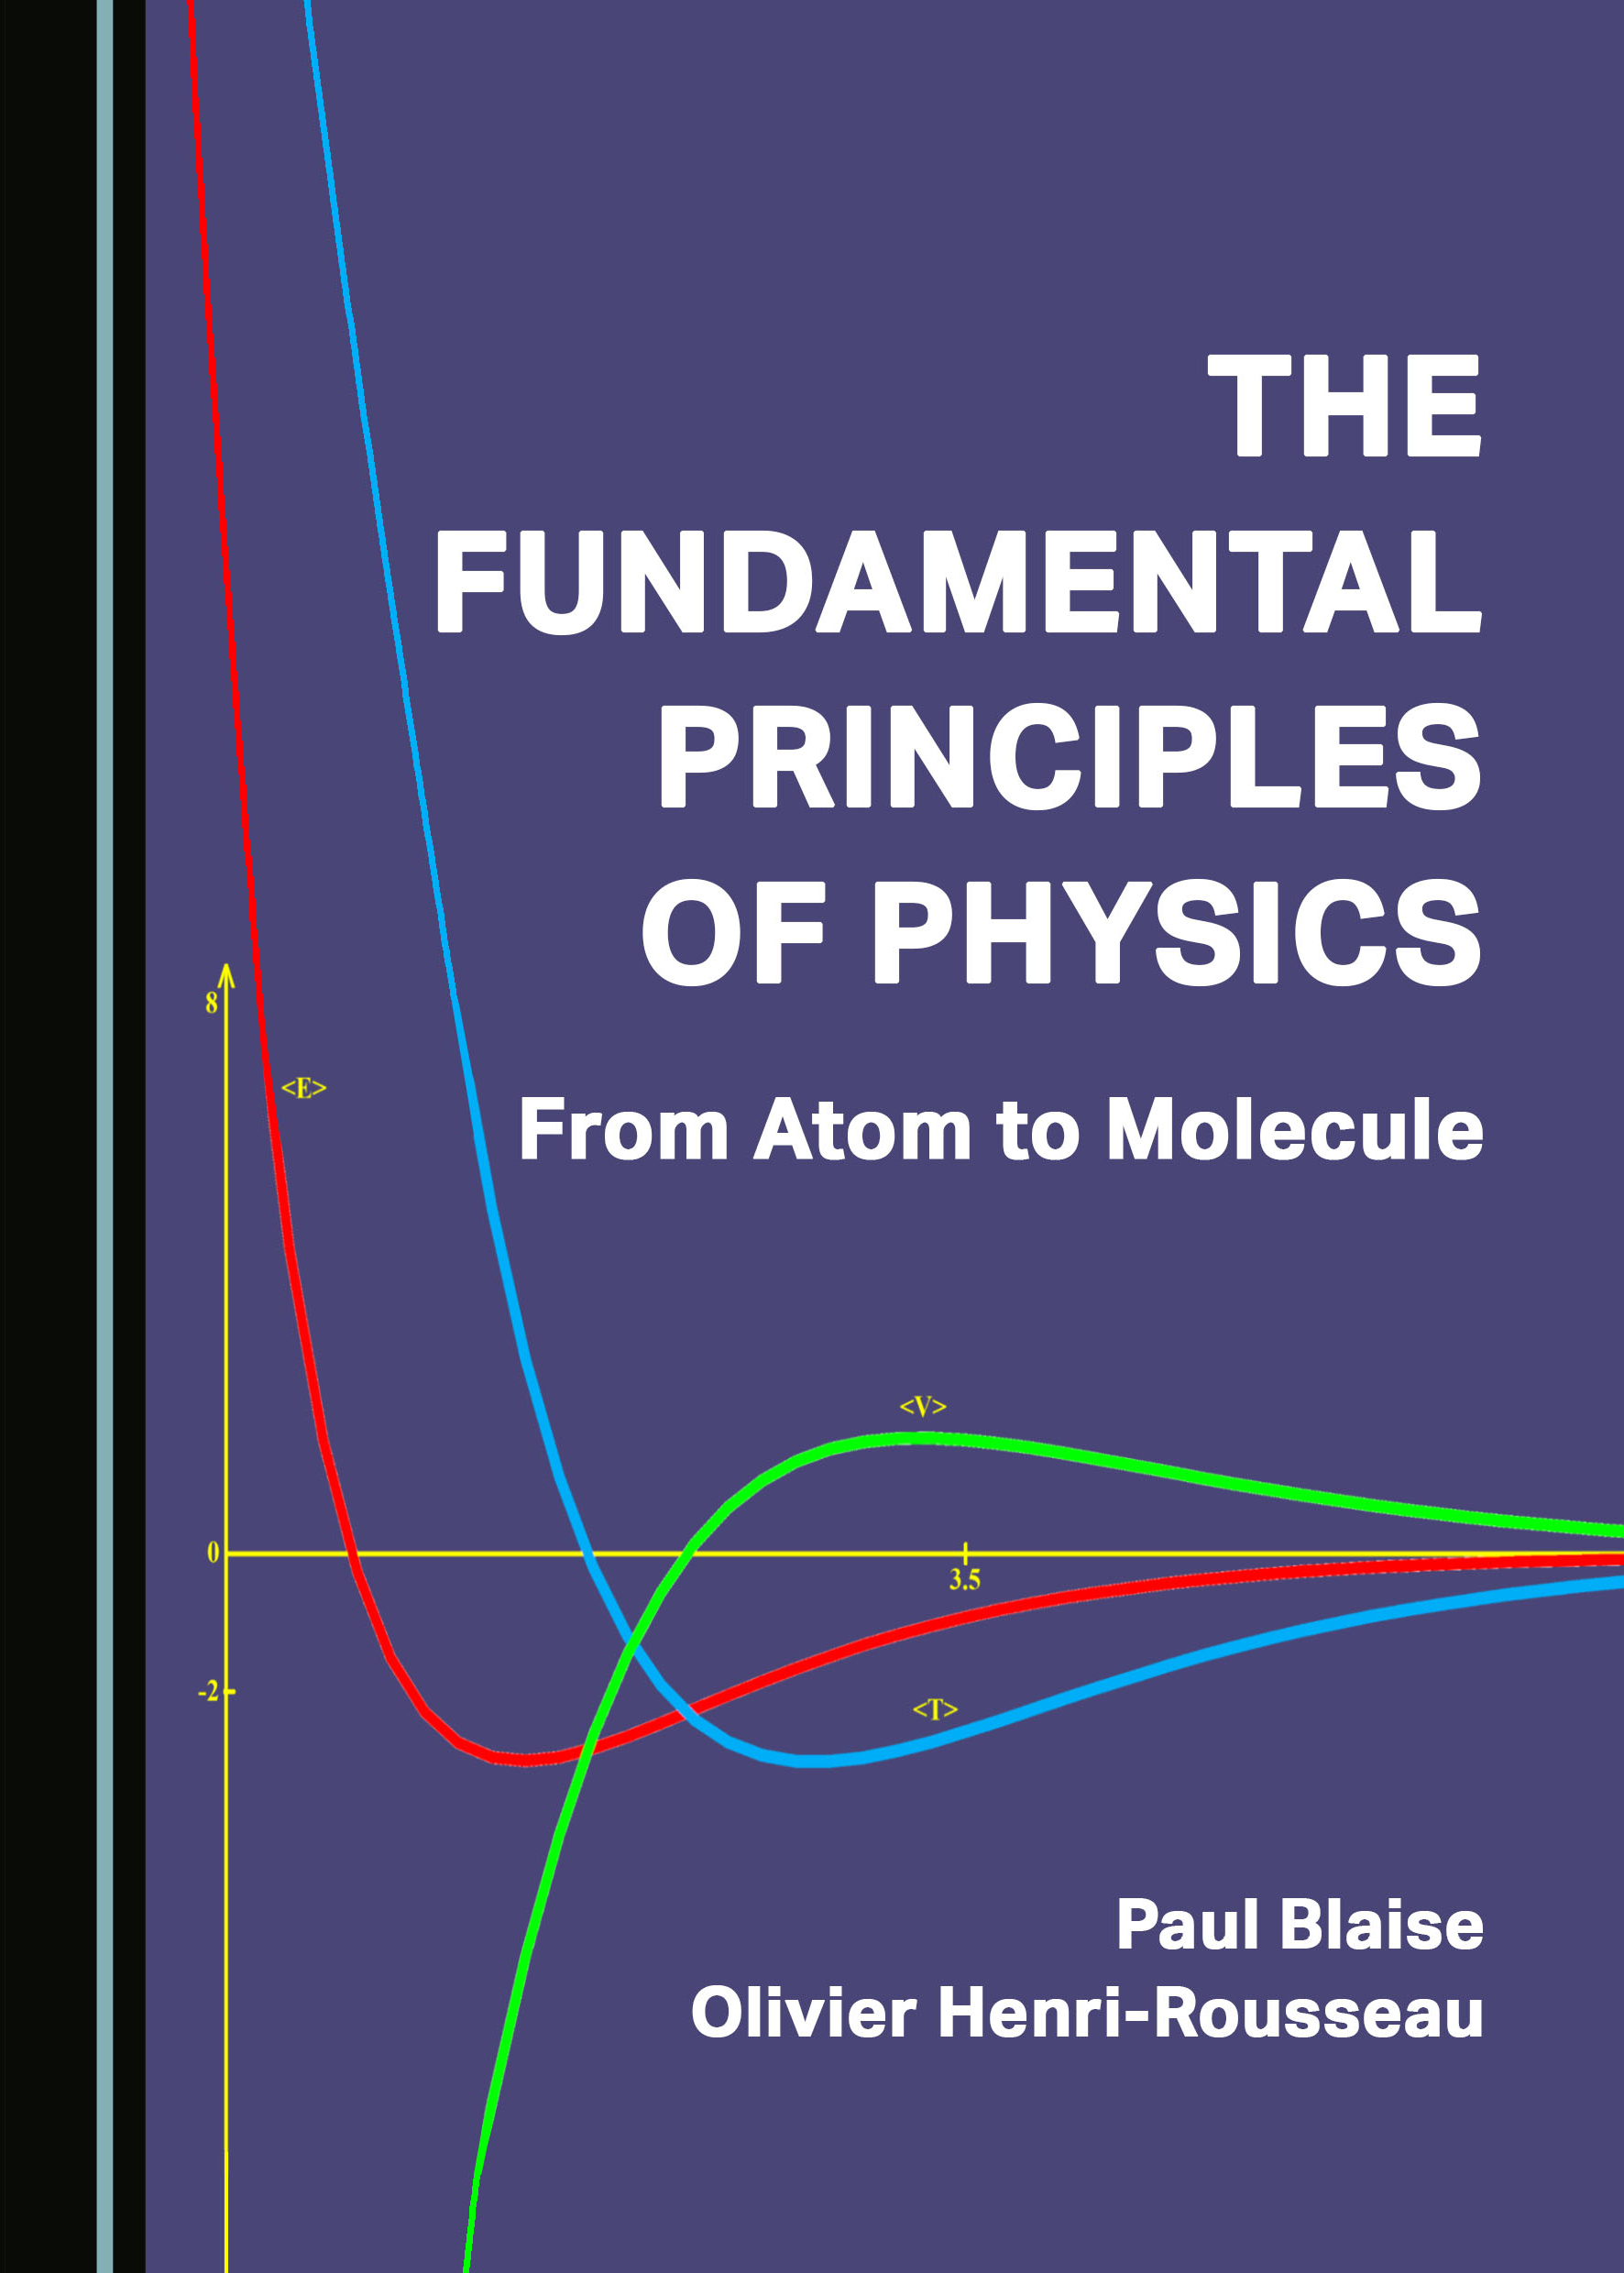 The fundamental principles of physics 2022